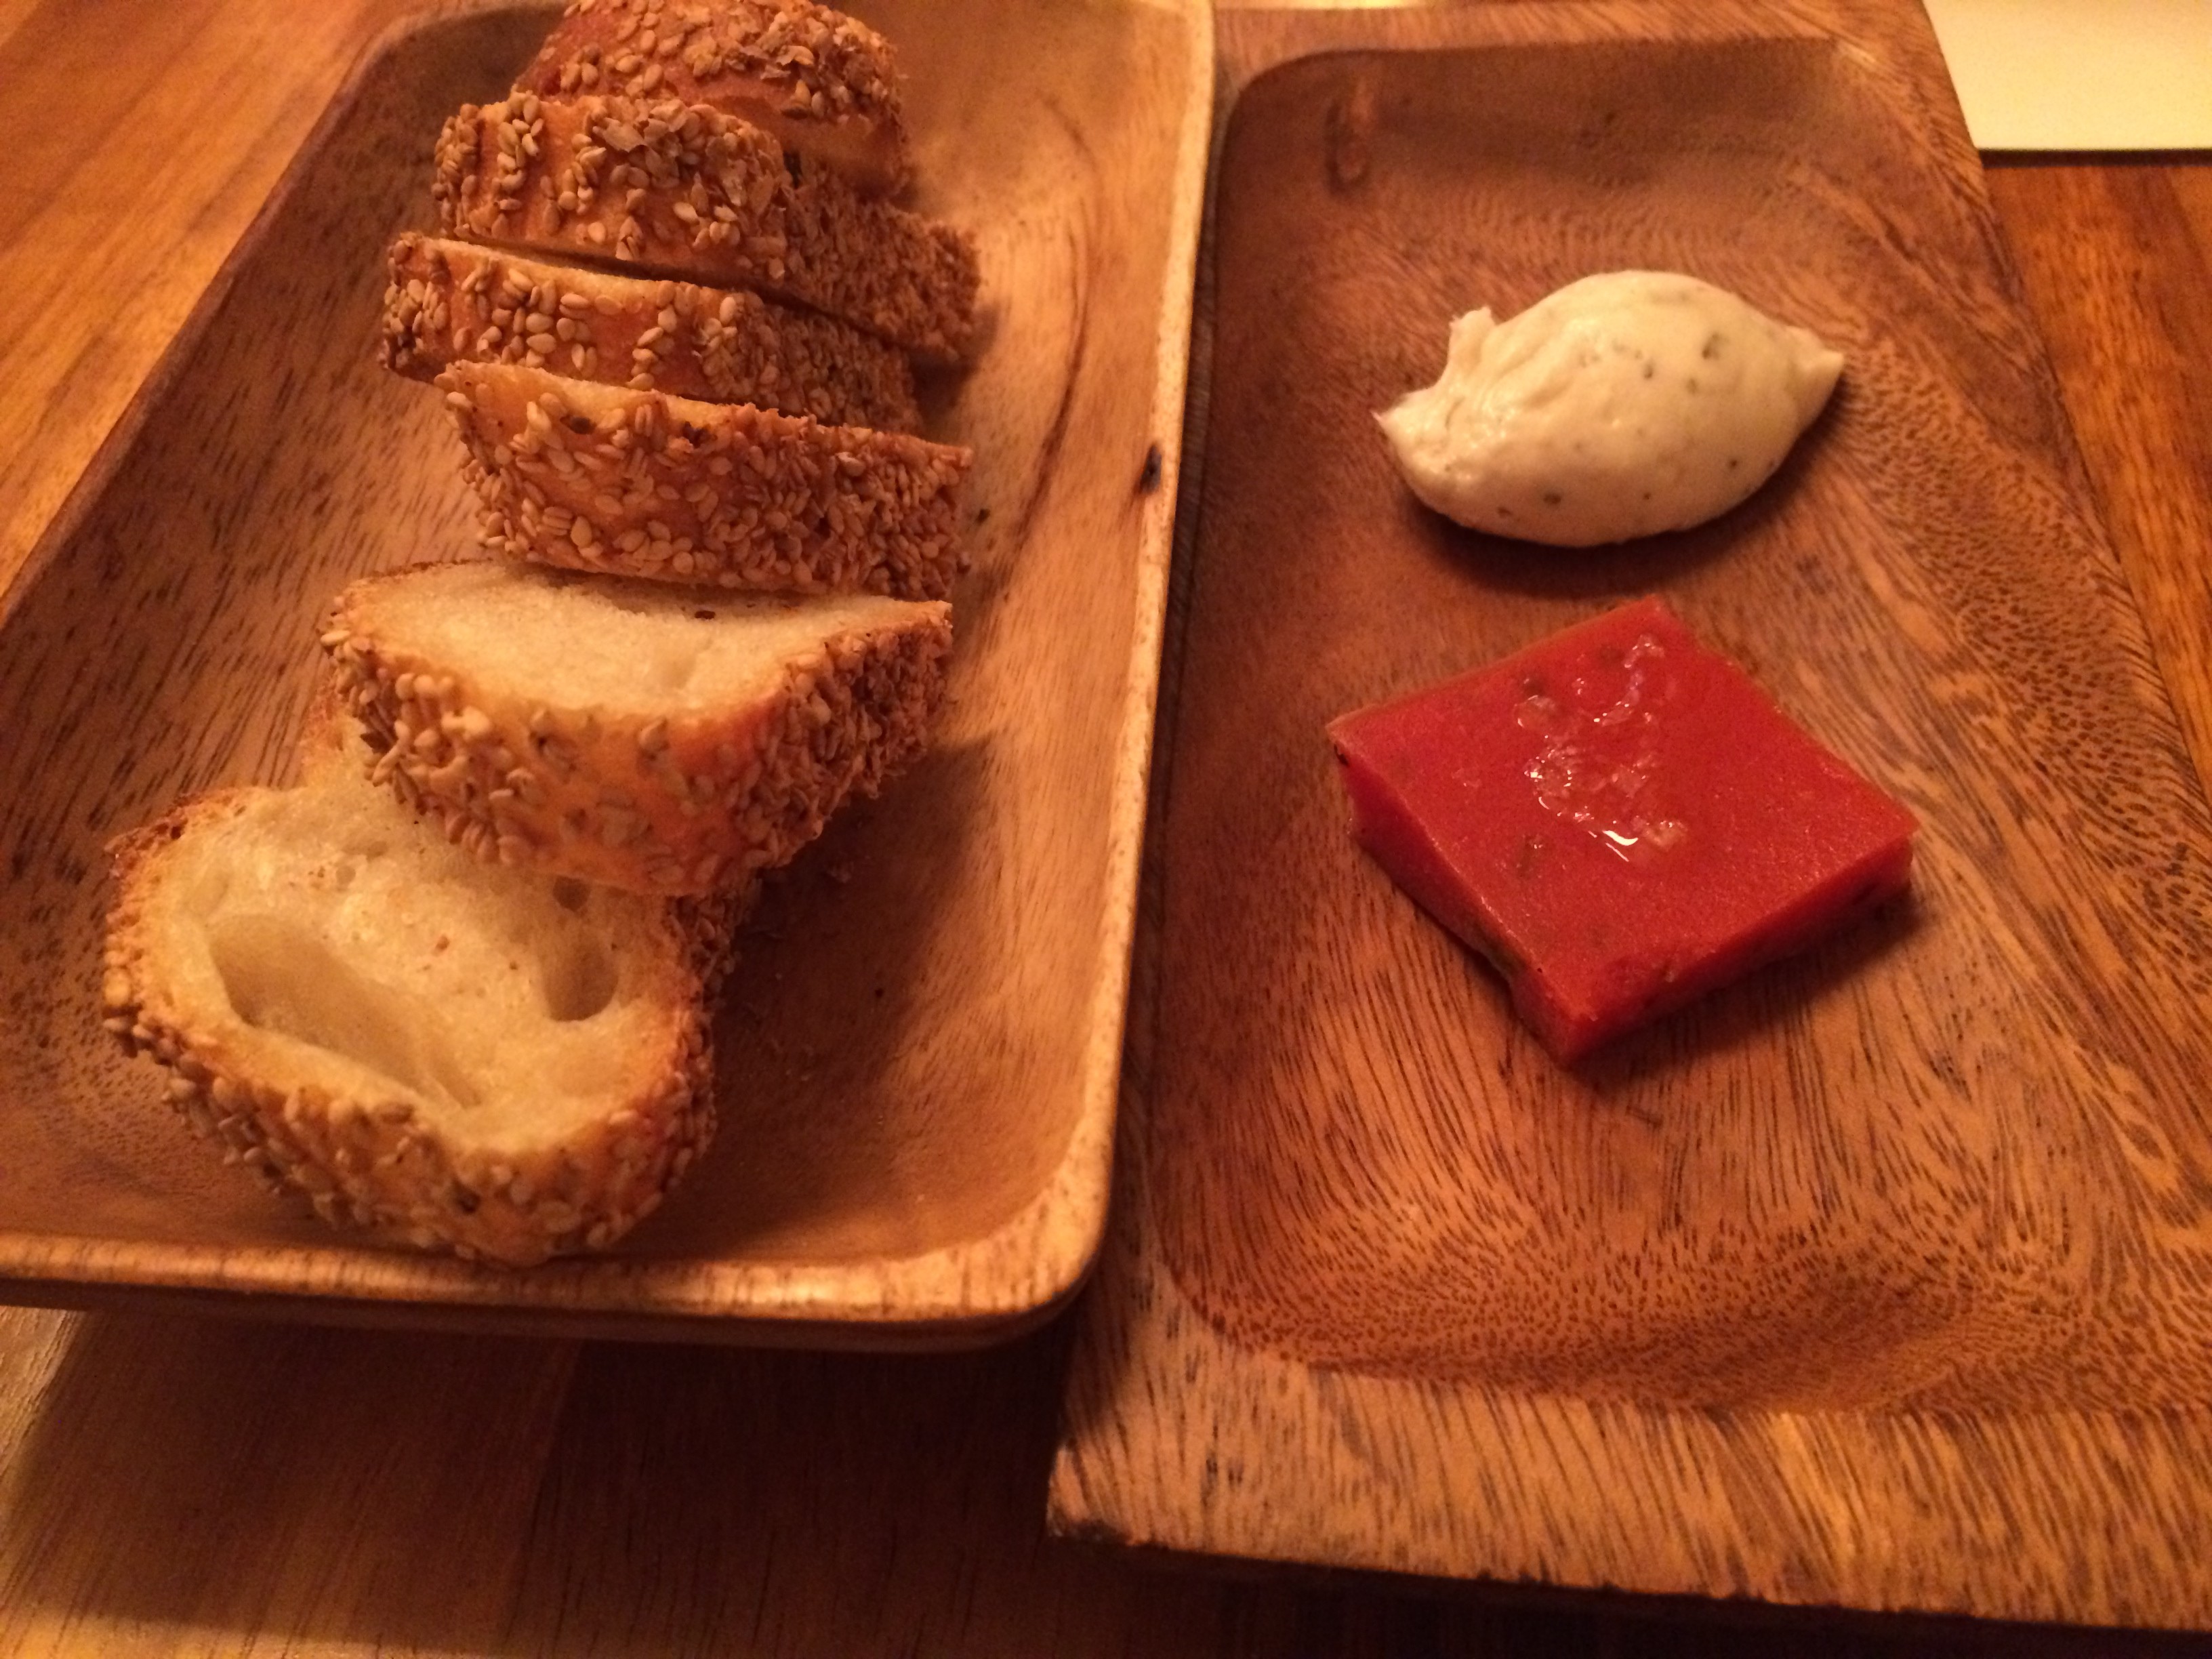 Seasame Bread With Lardo and Tomato Jam